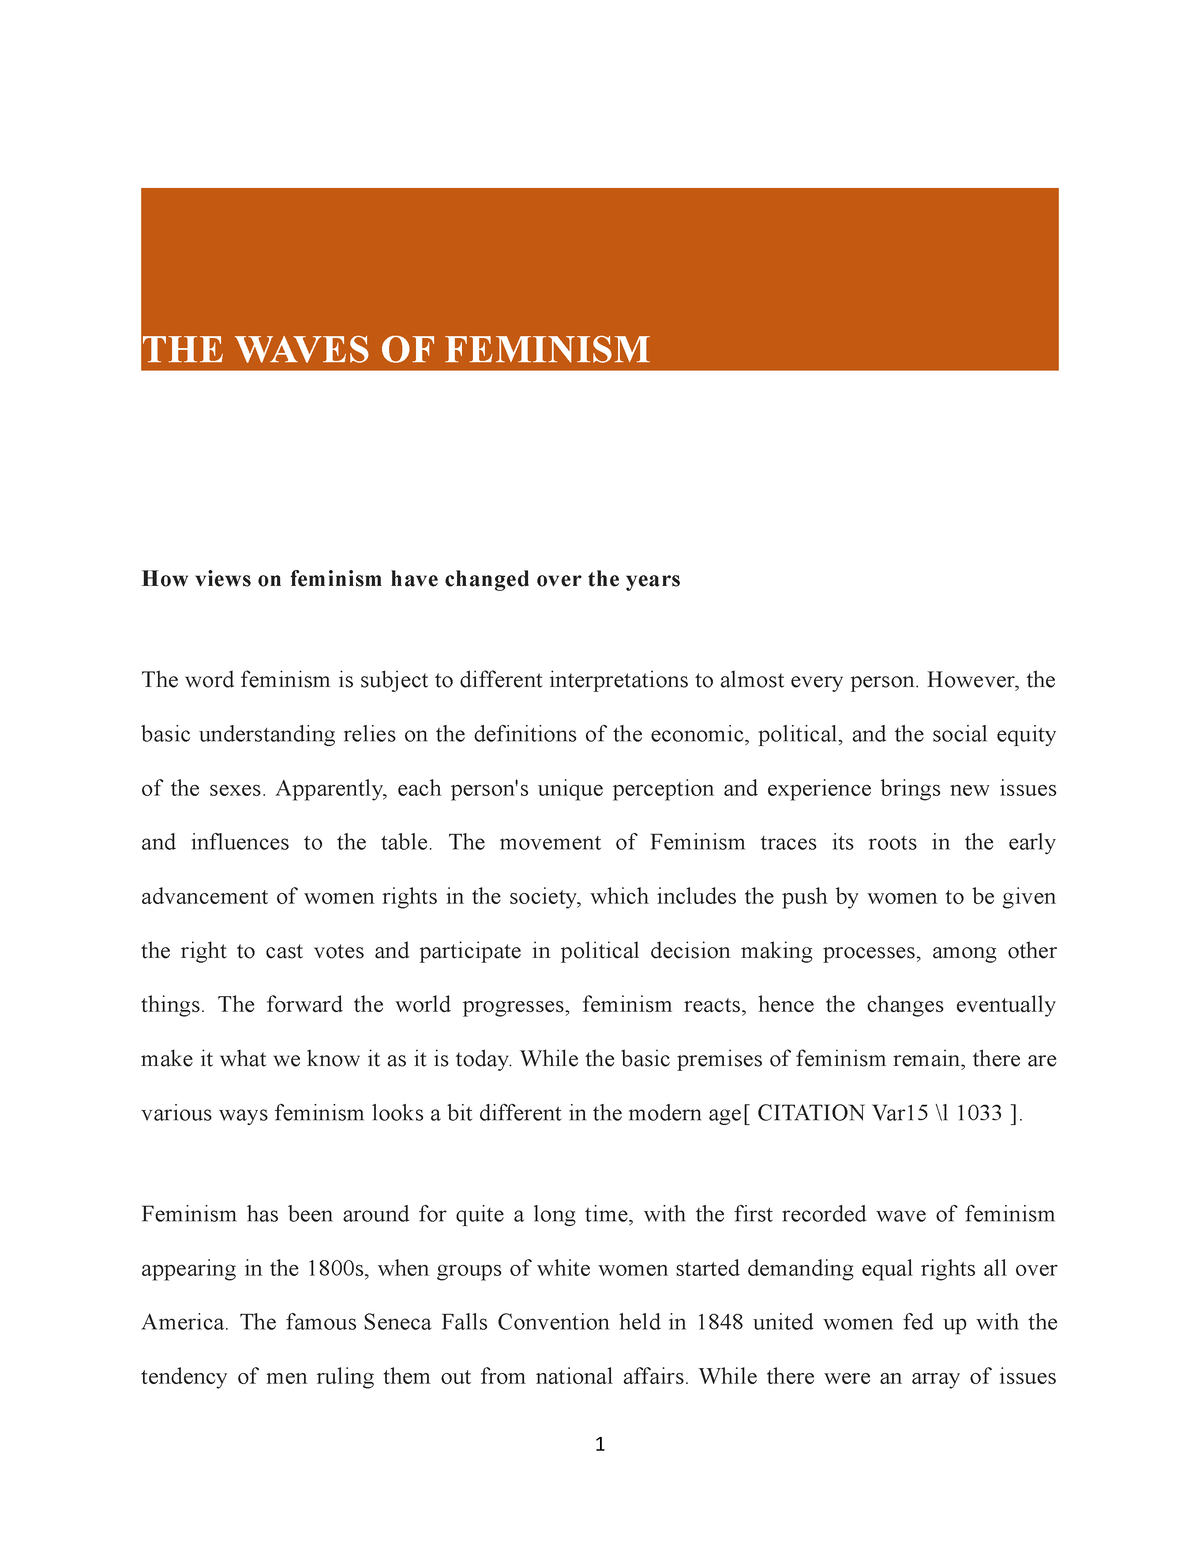 feminism waves essay